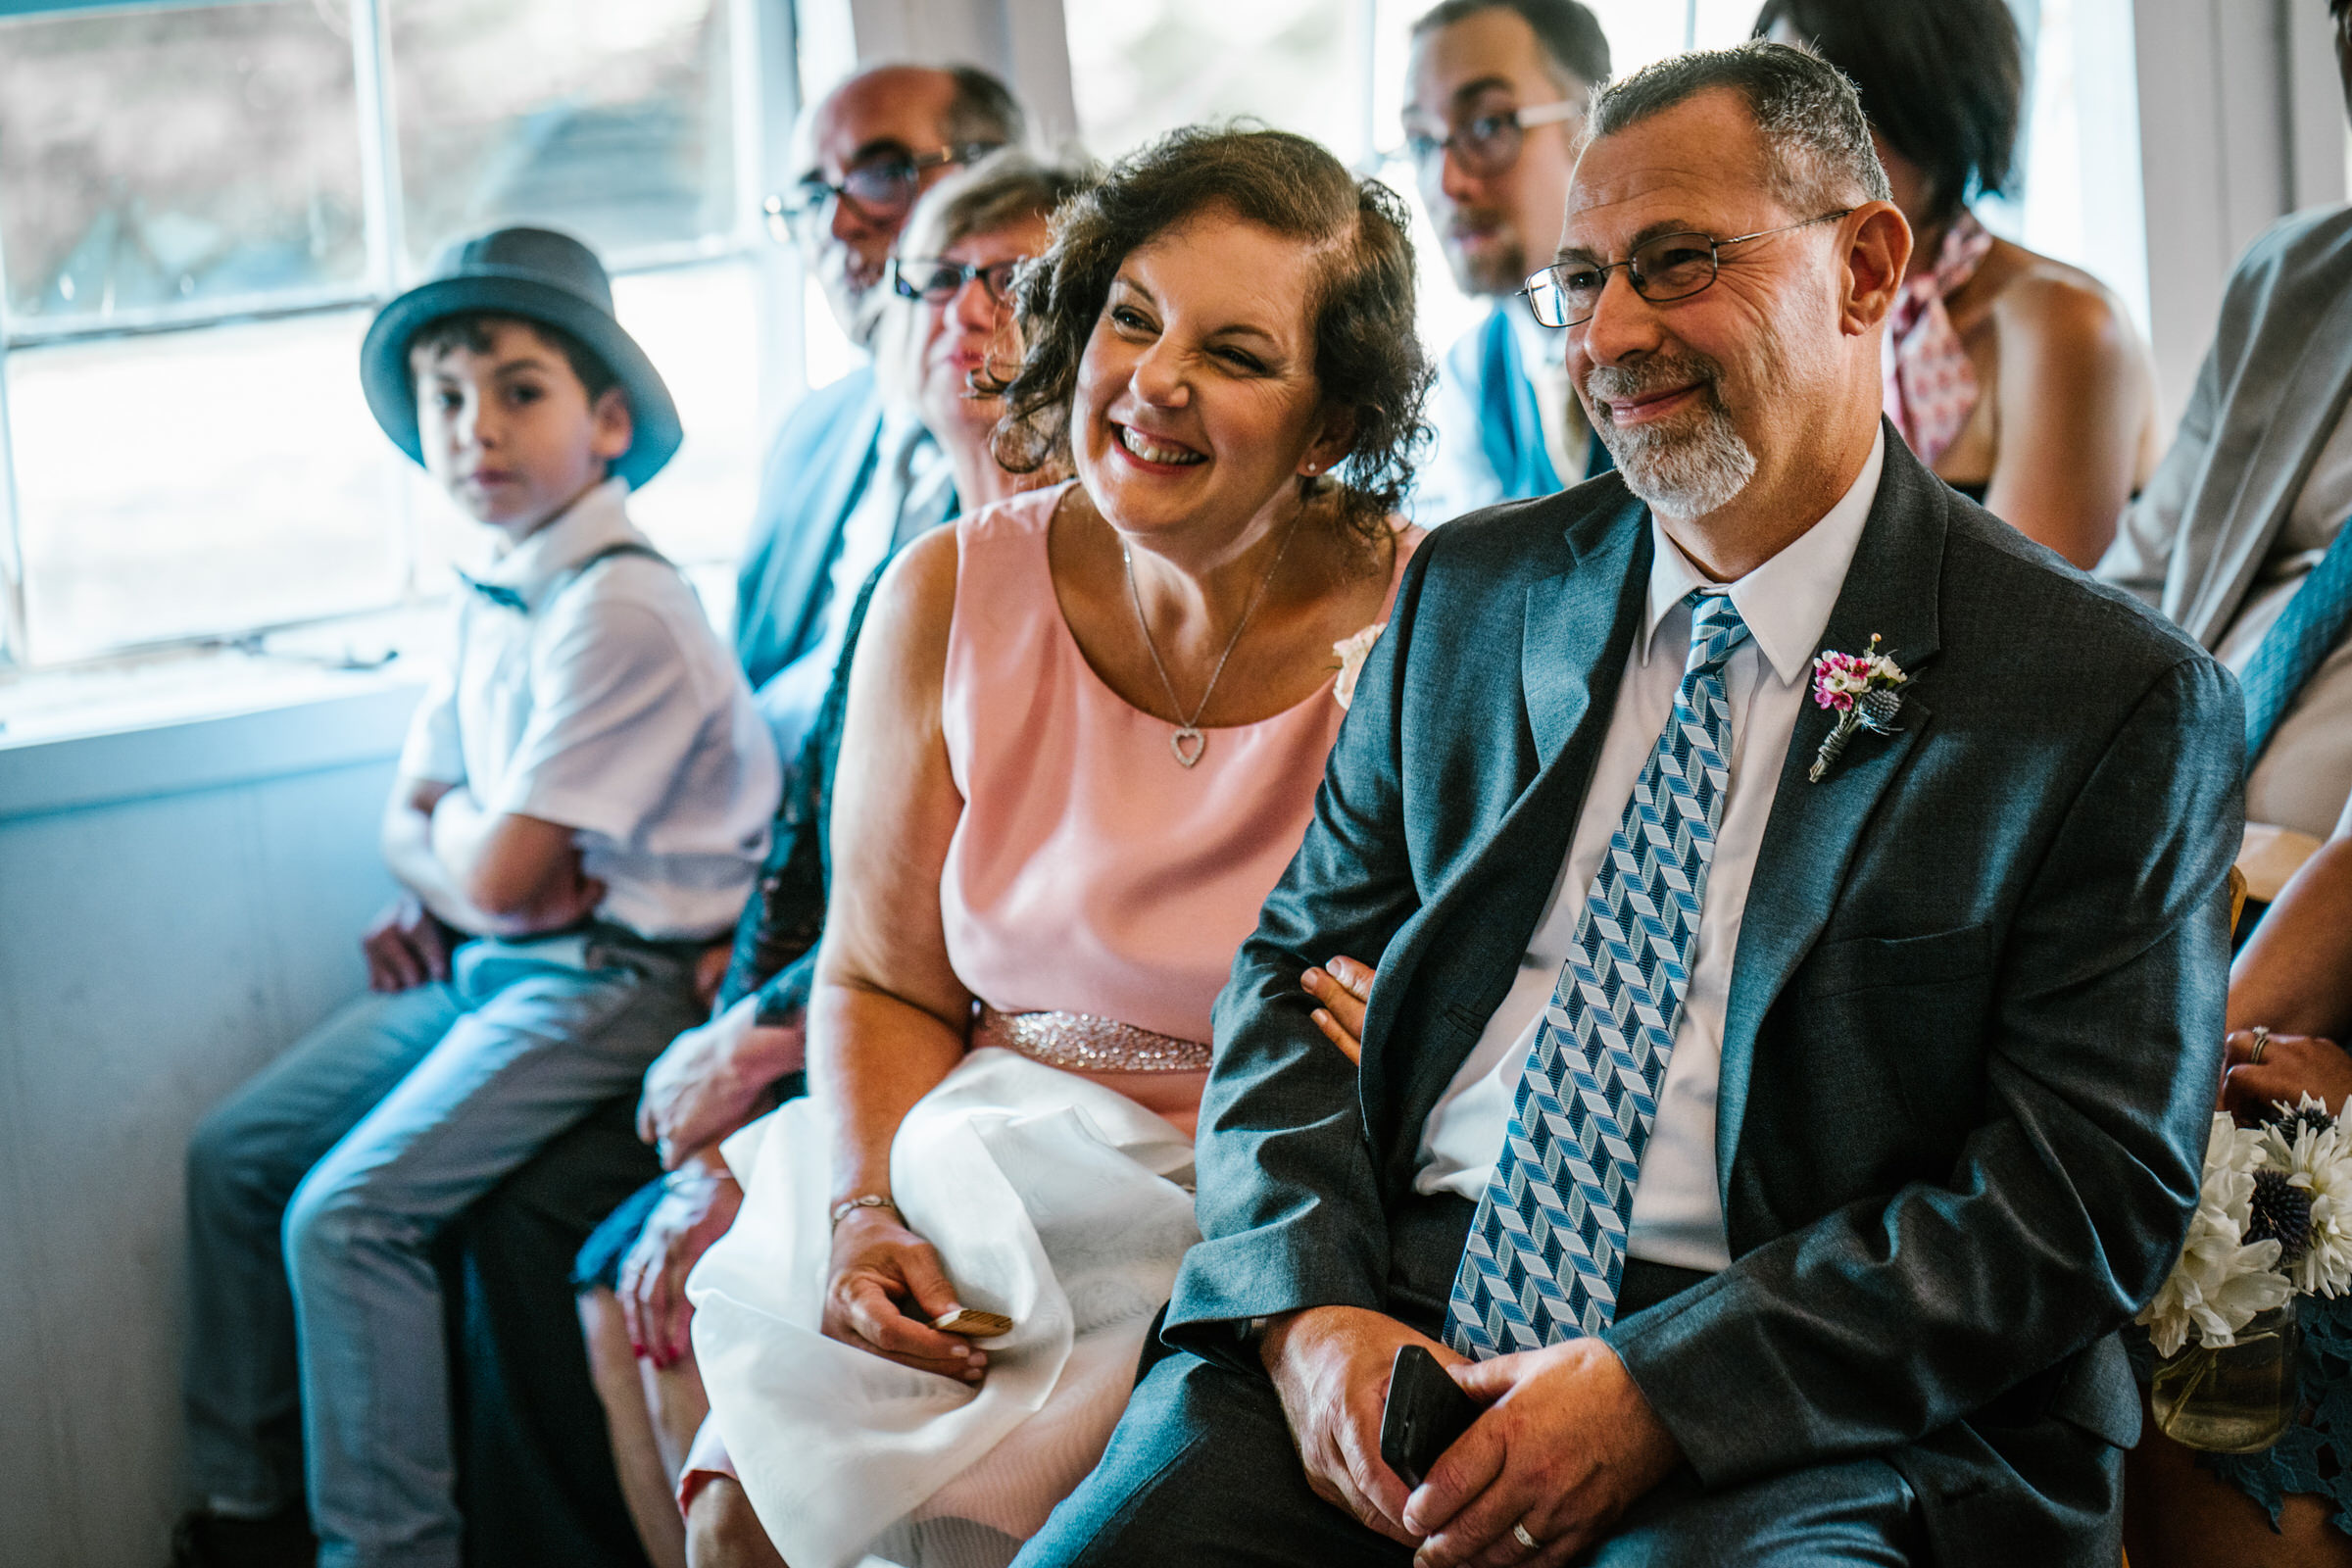 Wayfarer Whidbey Island Wedding: Joe's mom and stepdad smile at the wedding